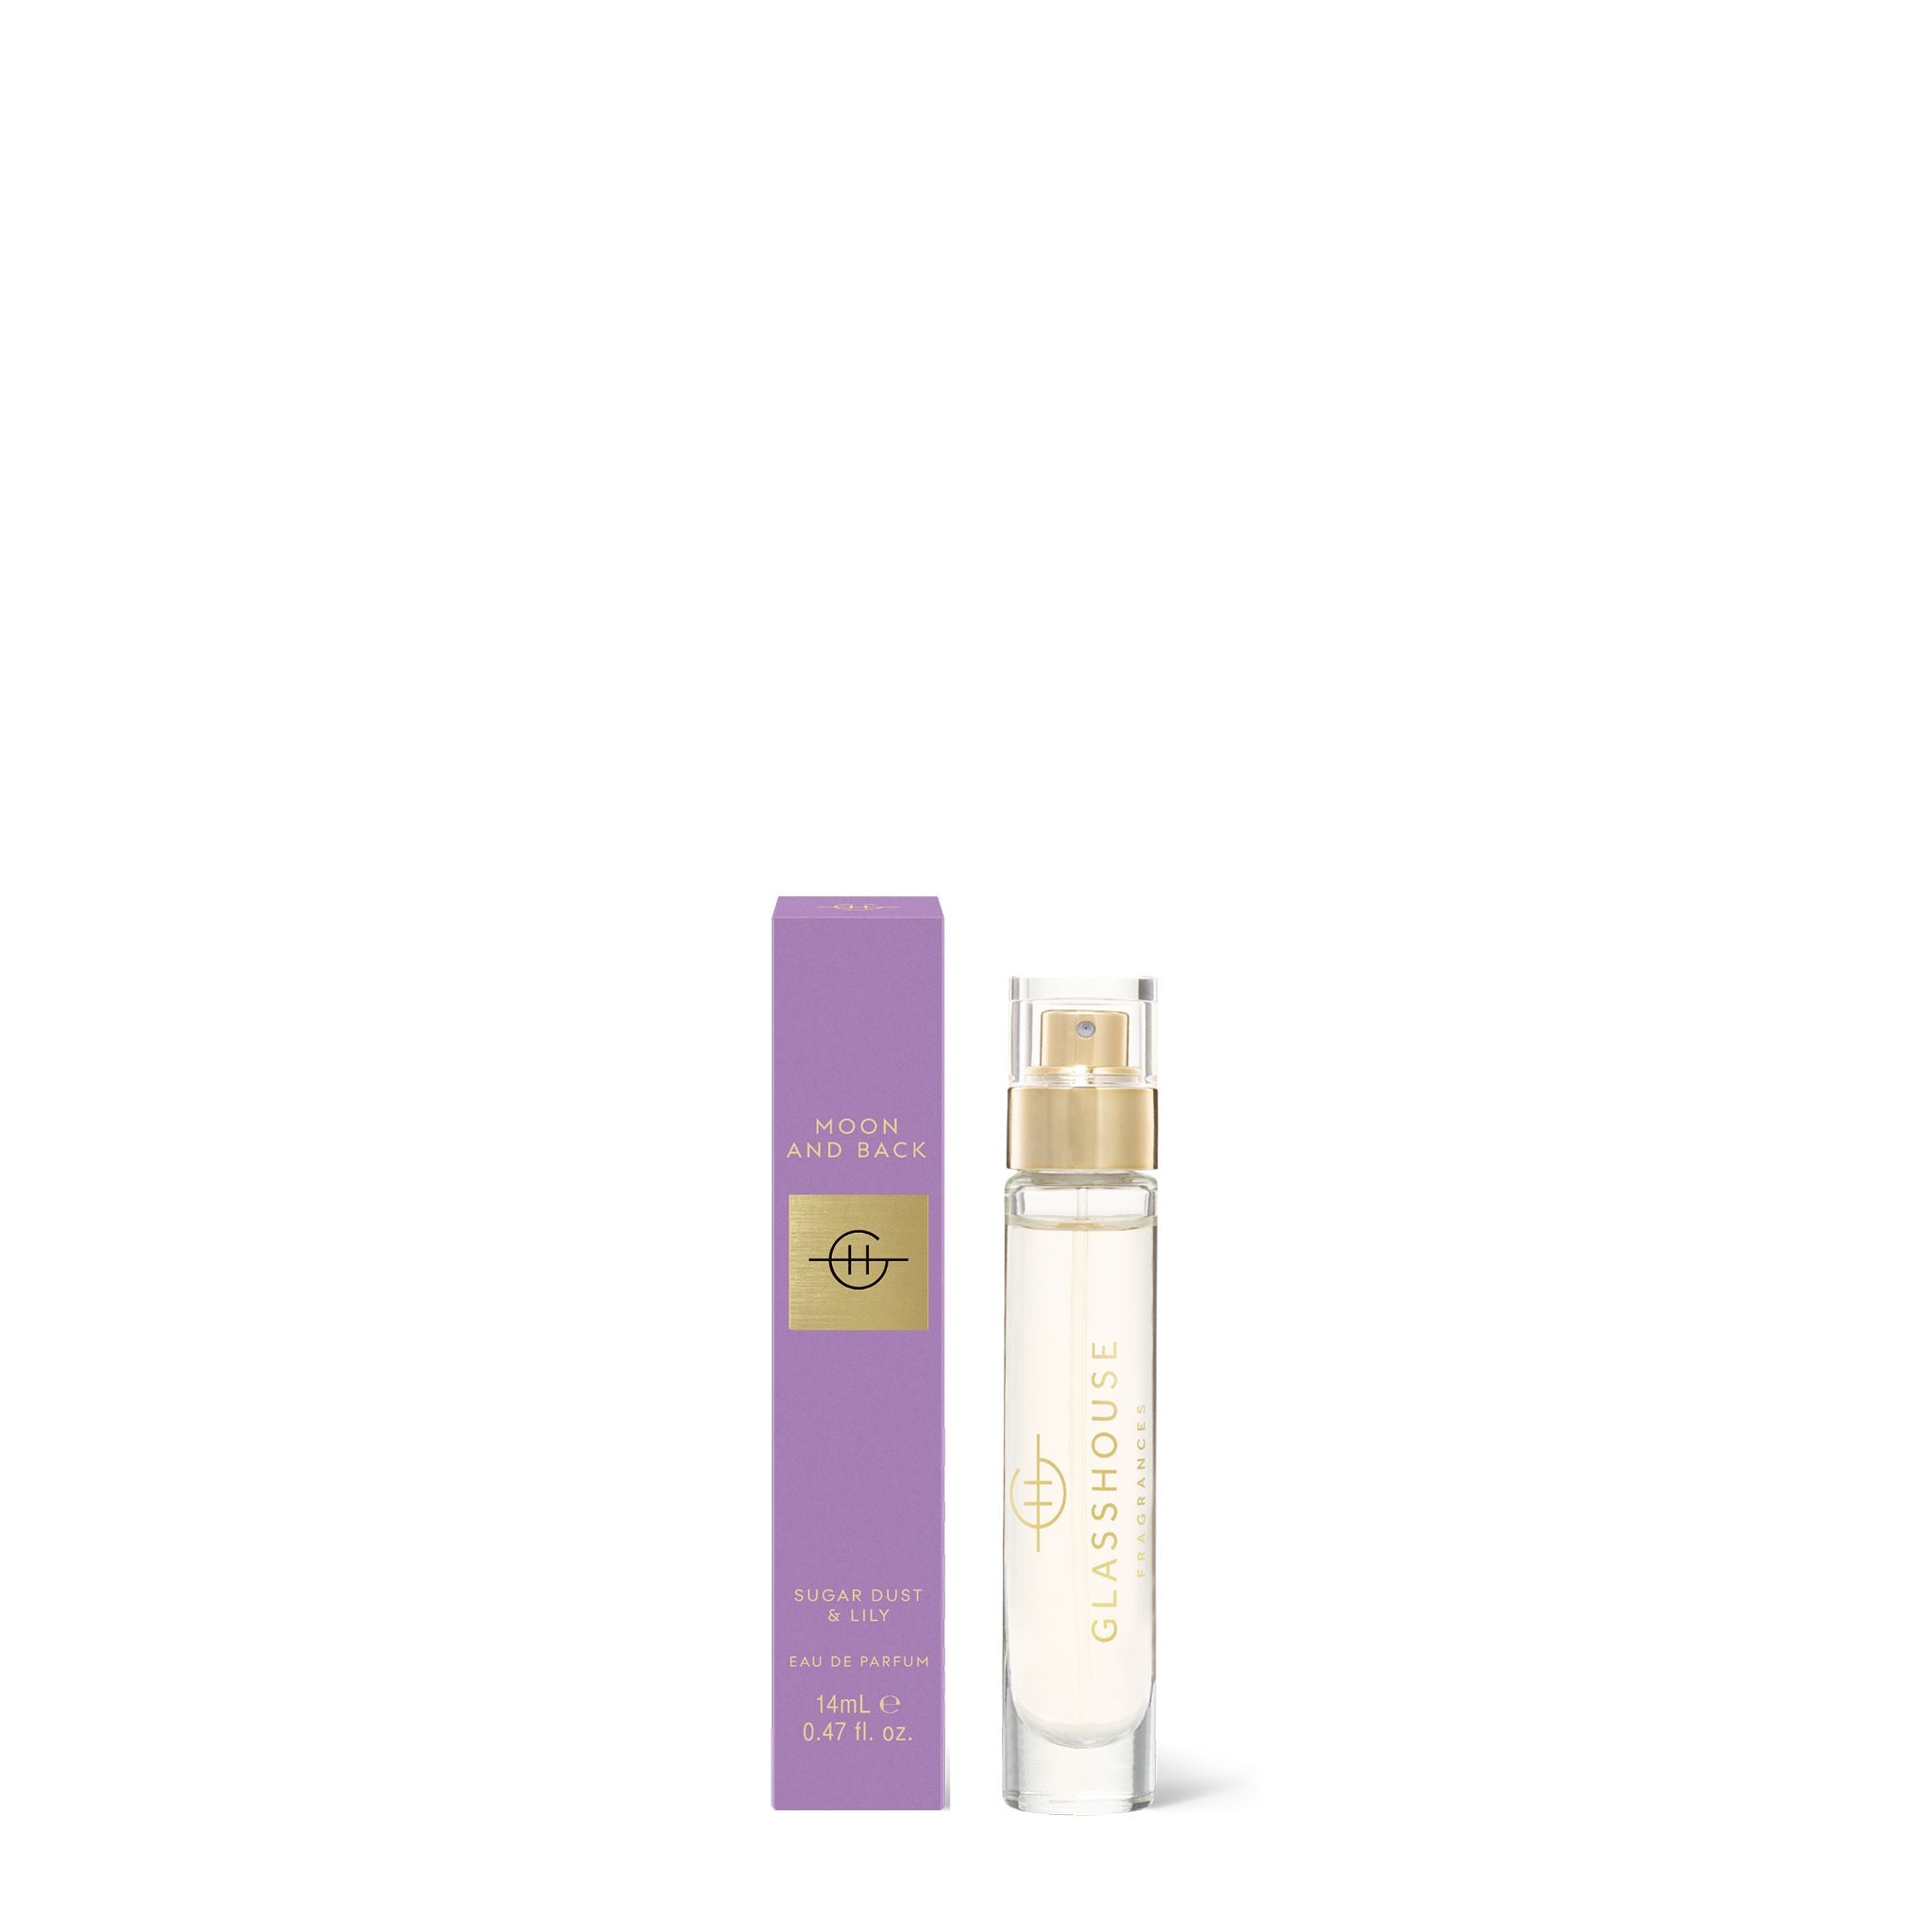 14mL Eau De Parfum - Asst Fragrances-Beauty & Well-Being-Glasshouse-Moon And Back-The Bay Room